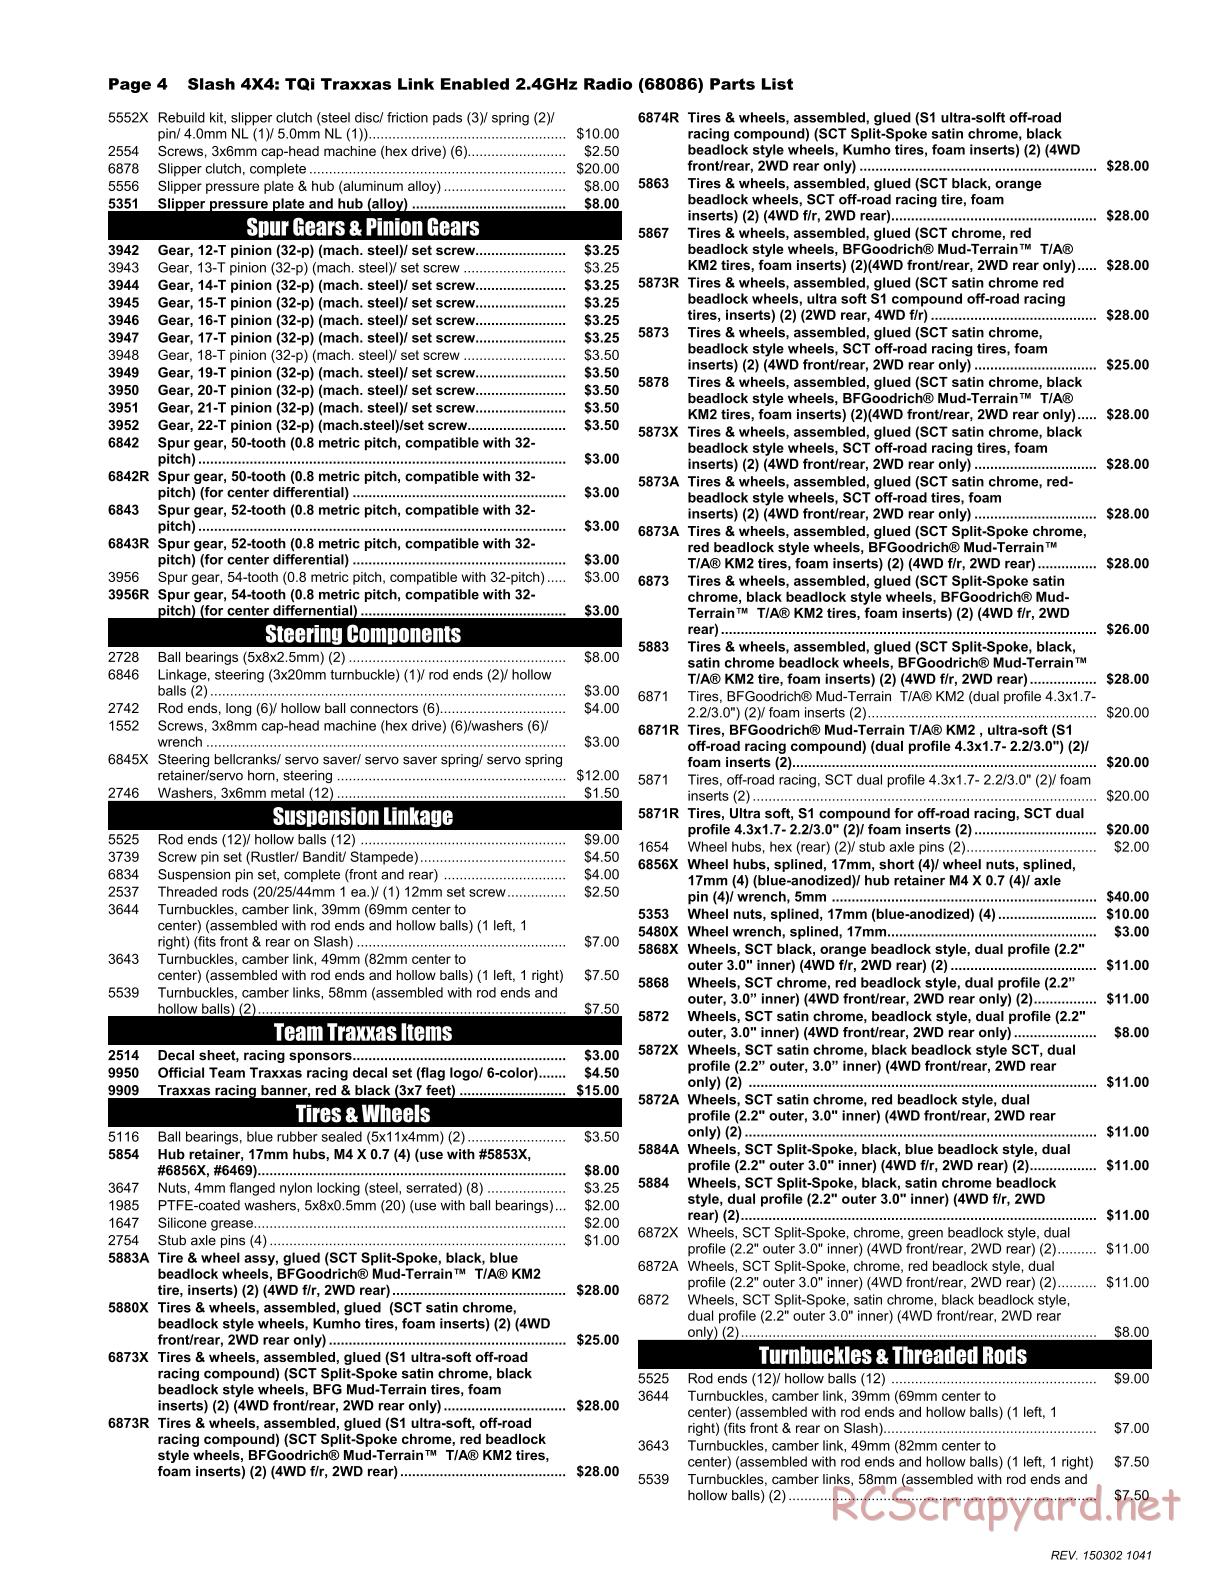 Traxxas - Slash 4x4 (2014) - Parts List - Page 4